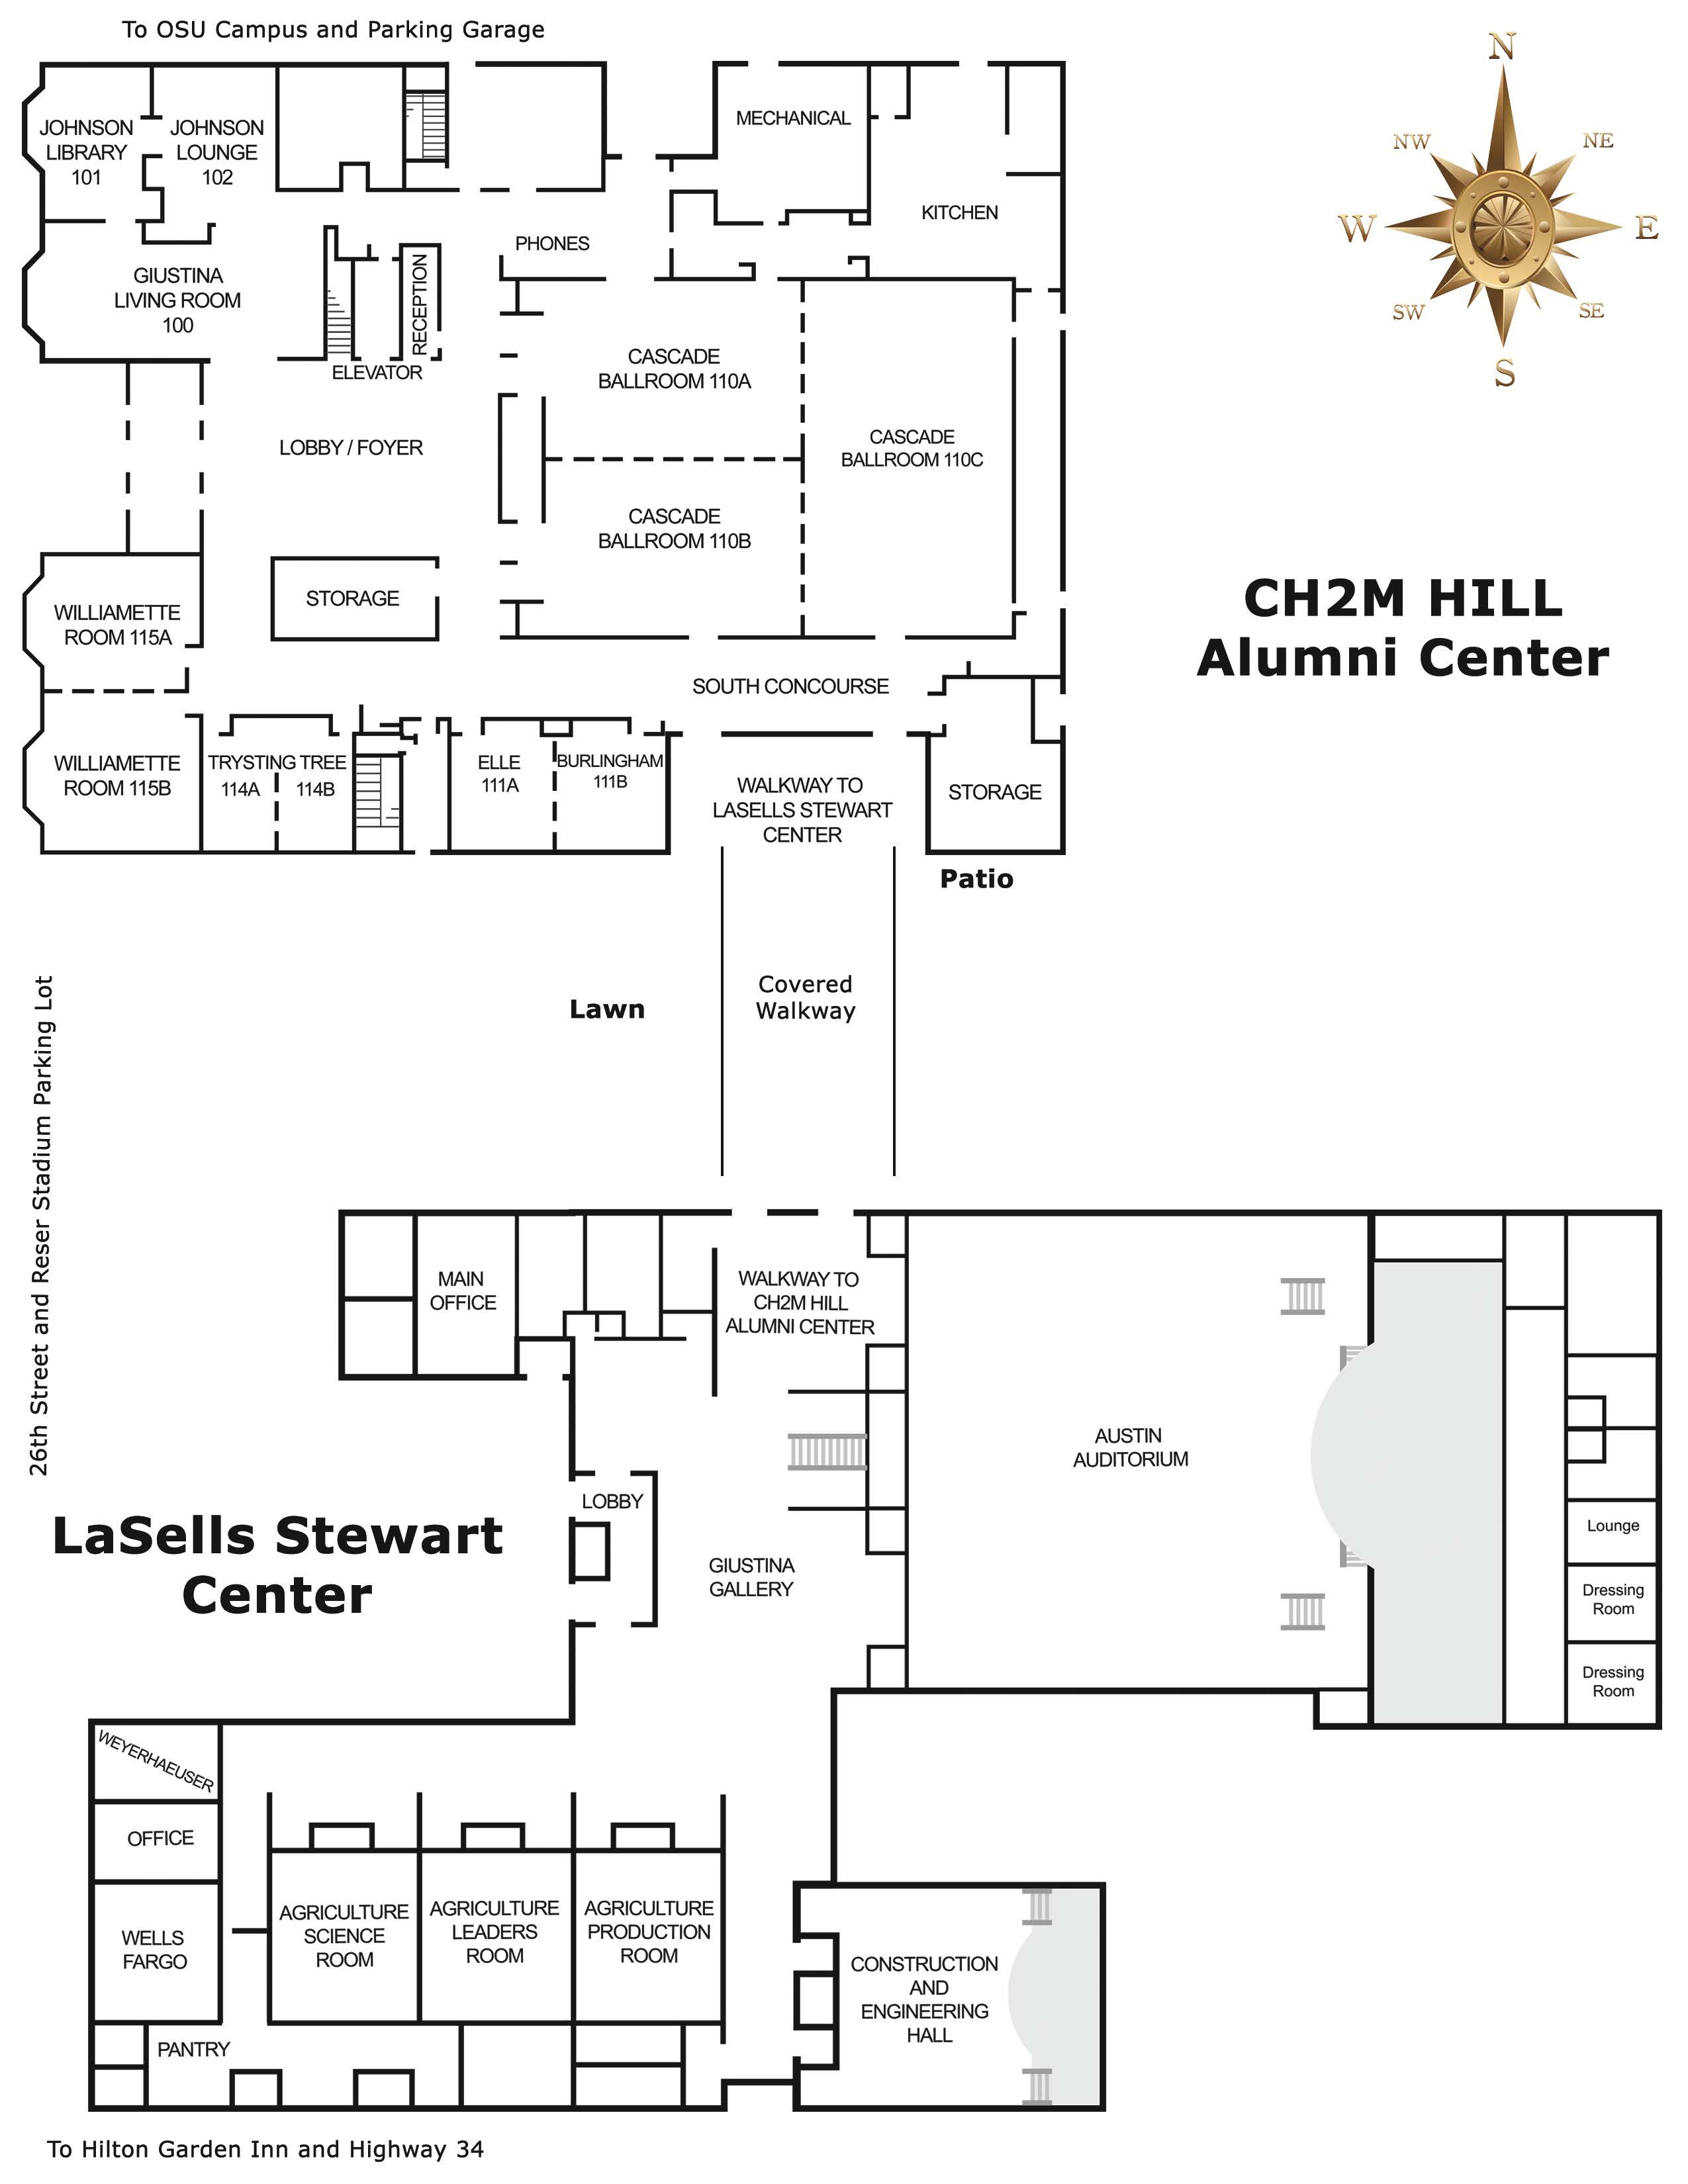 Schematic of The LaSells Stewart Center and Alumni Center